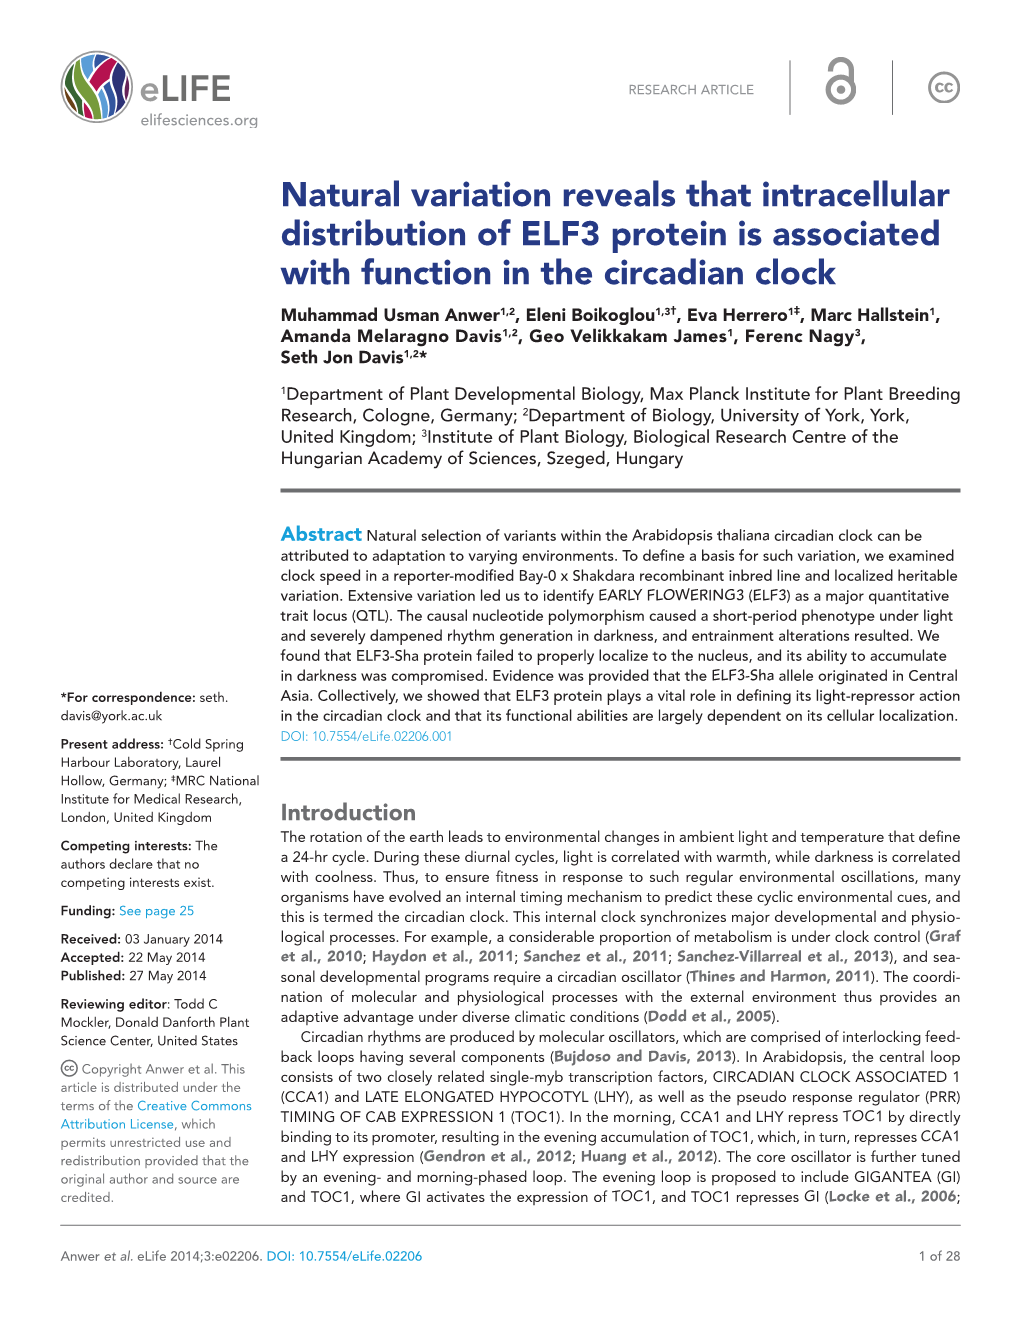 Natural Variation Reveals That Intracellular Distribution Of